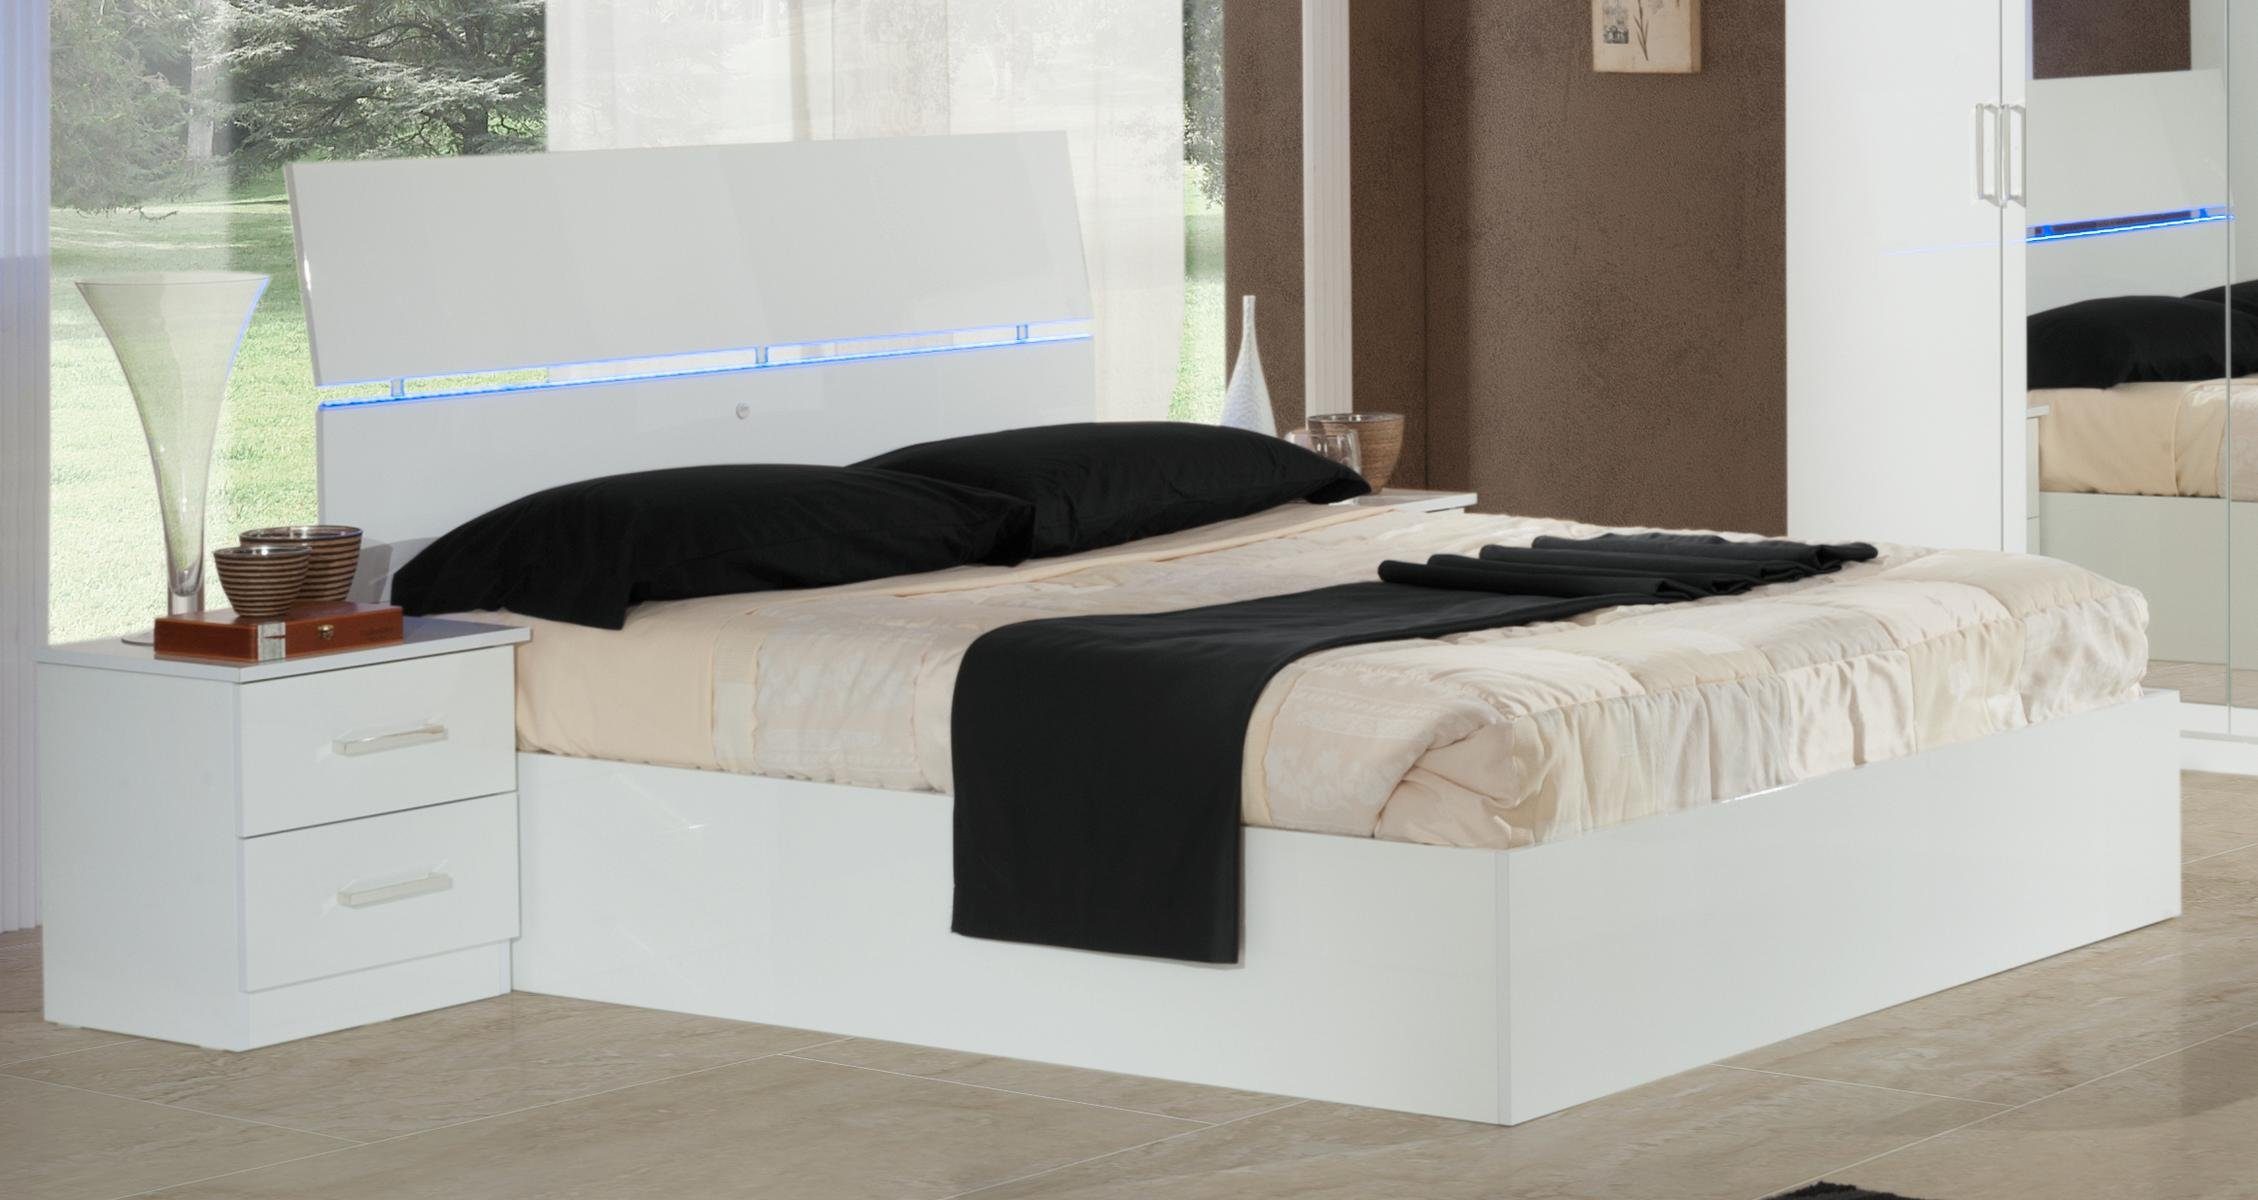 Hotel JVmoebel Schlafzimmer Italy in Klassische Bett, Textil Made Polster Bett